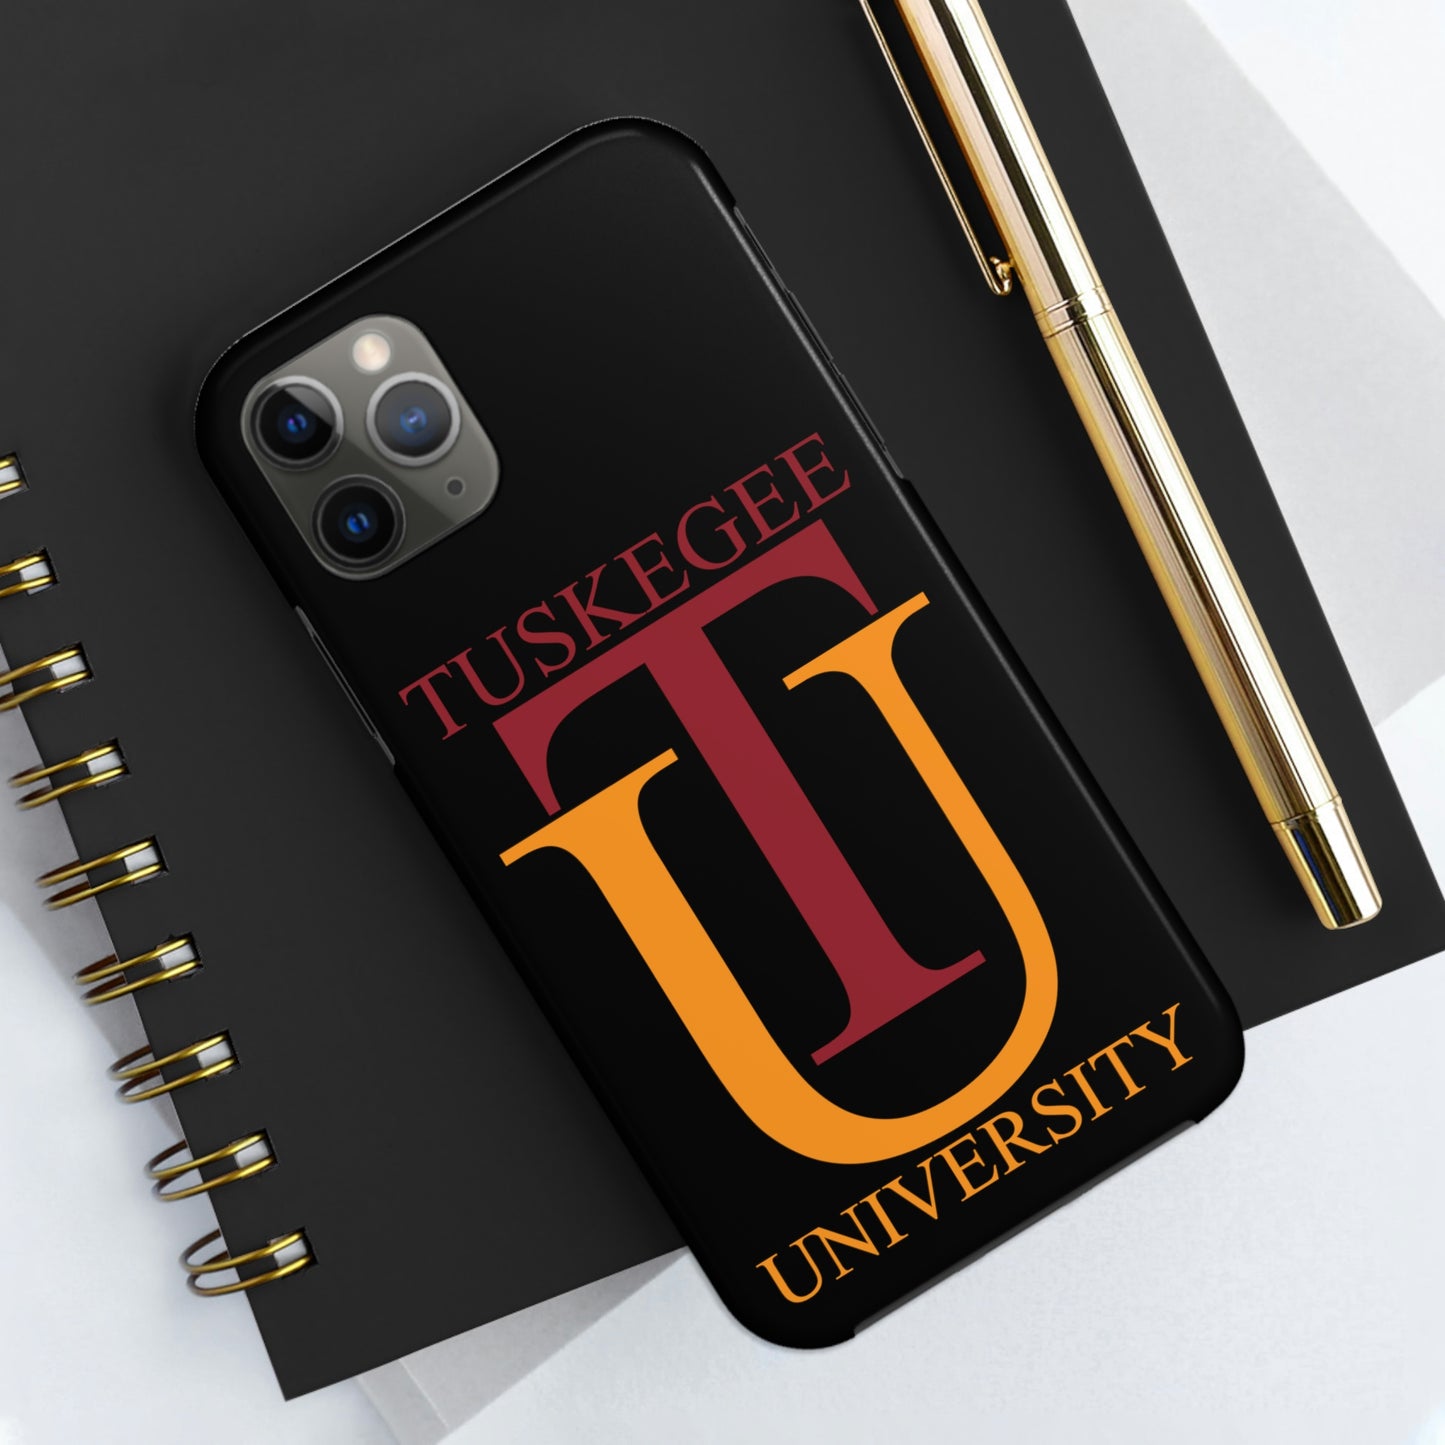 HBCU Love (Tuskegee University/ Tough Phone Cases, Case-Mate)